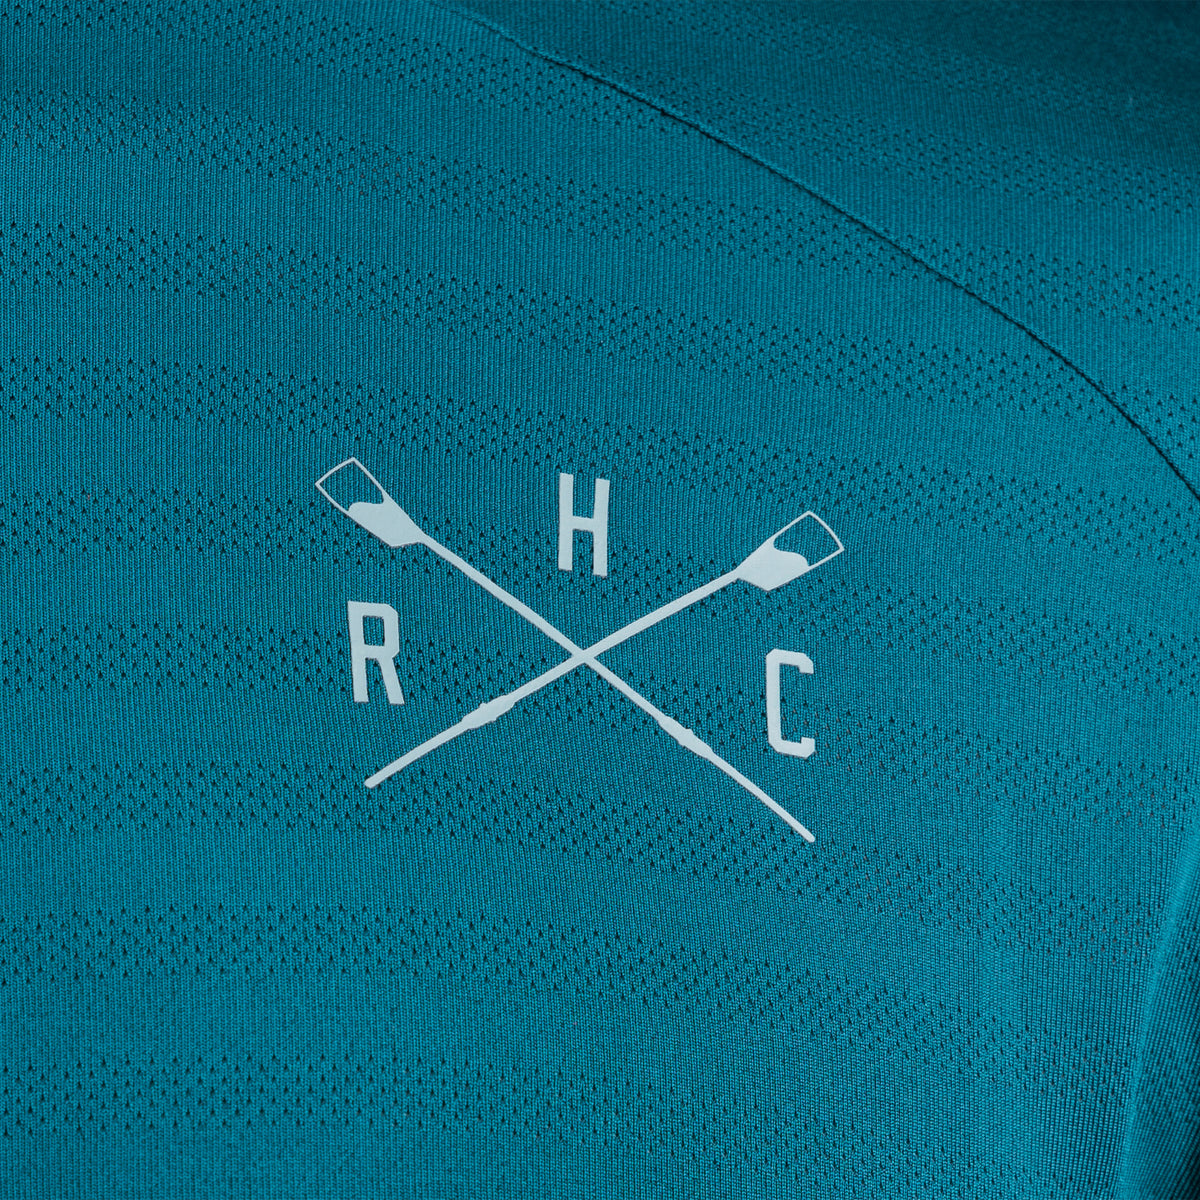 Zoomed in hyrdow crossed oars logo on dark blue background